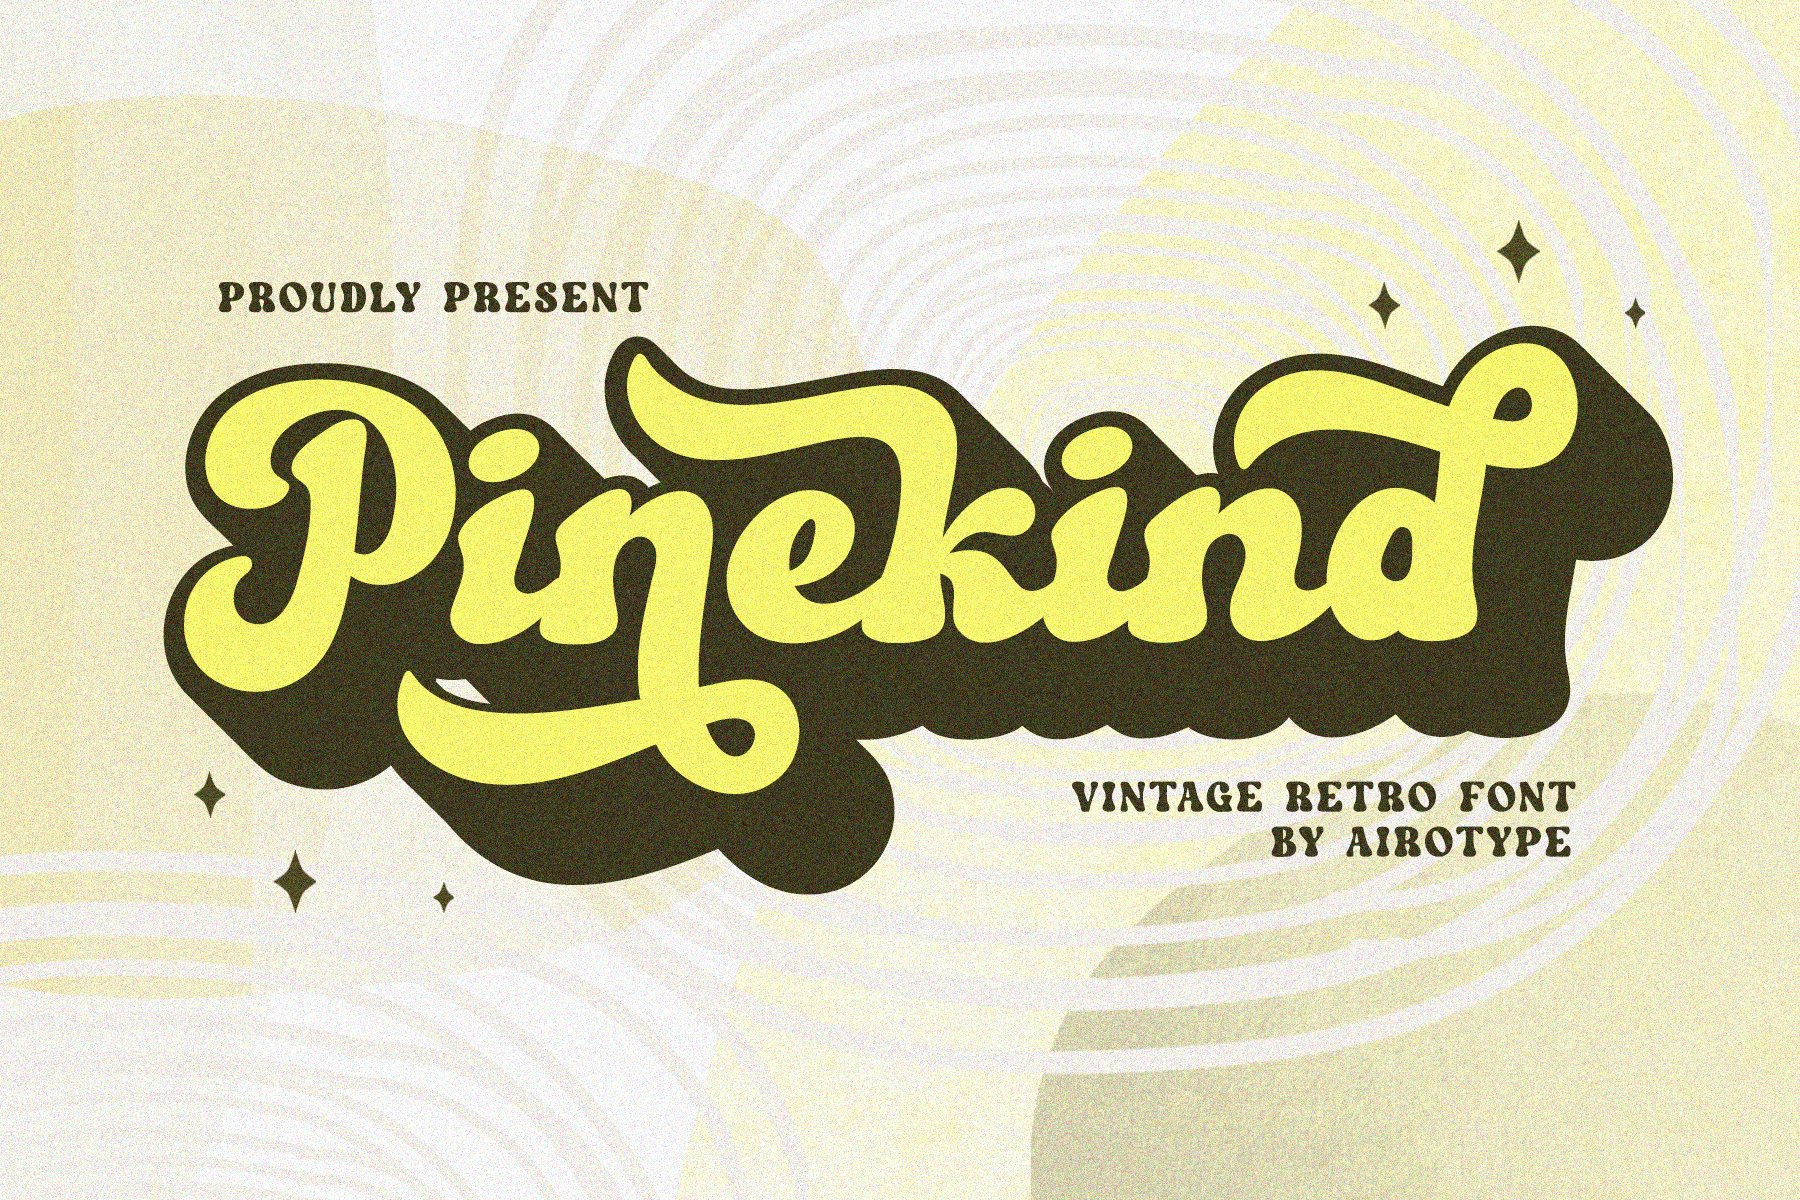 Pinekind - Groovy Retro Font cover image.